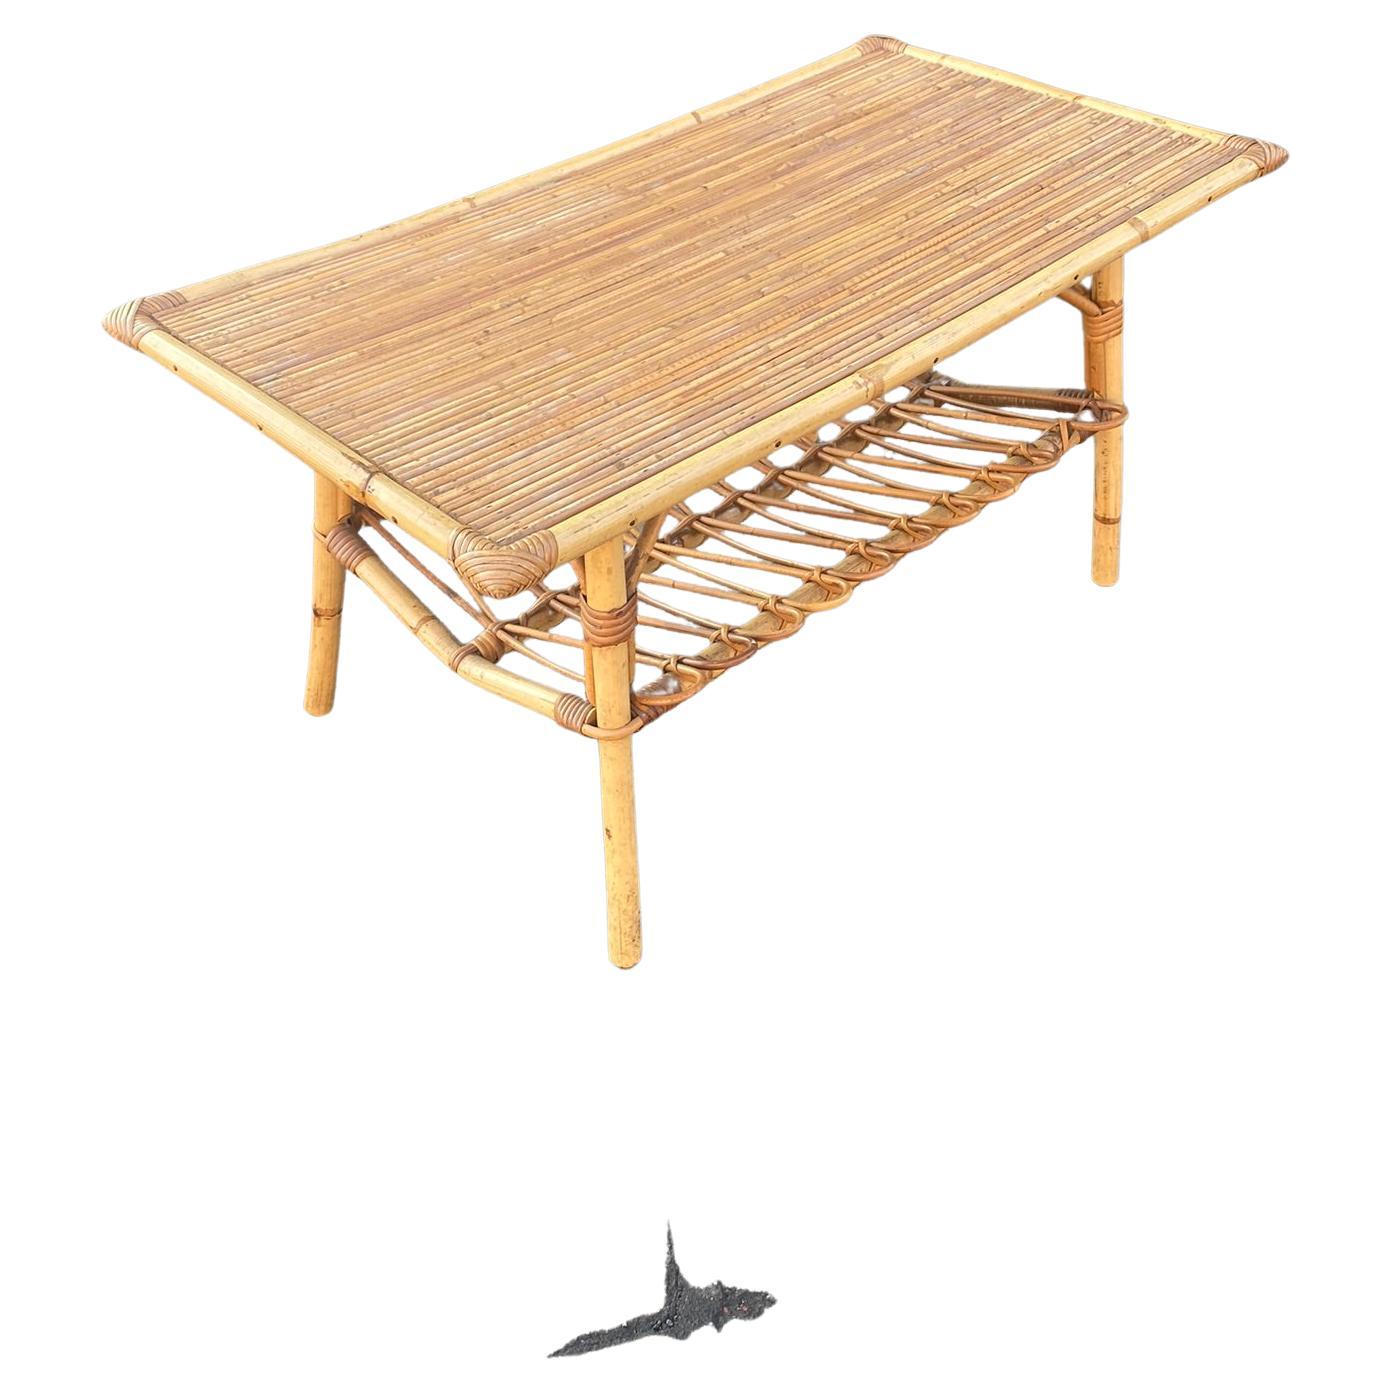 Table en bambou, datant d'environ 1960-1970